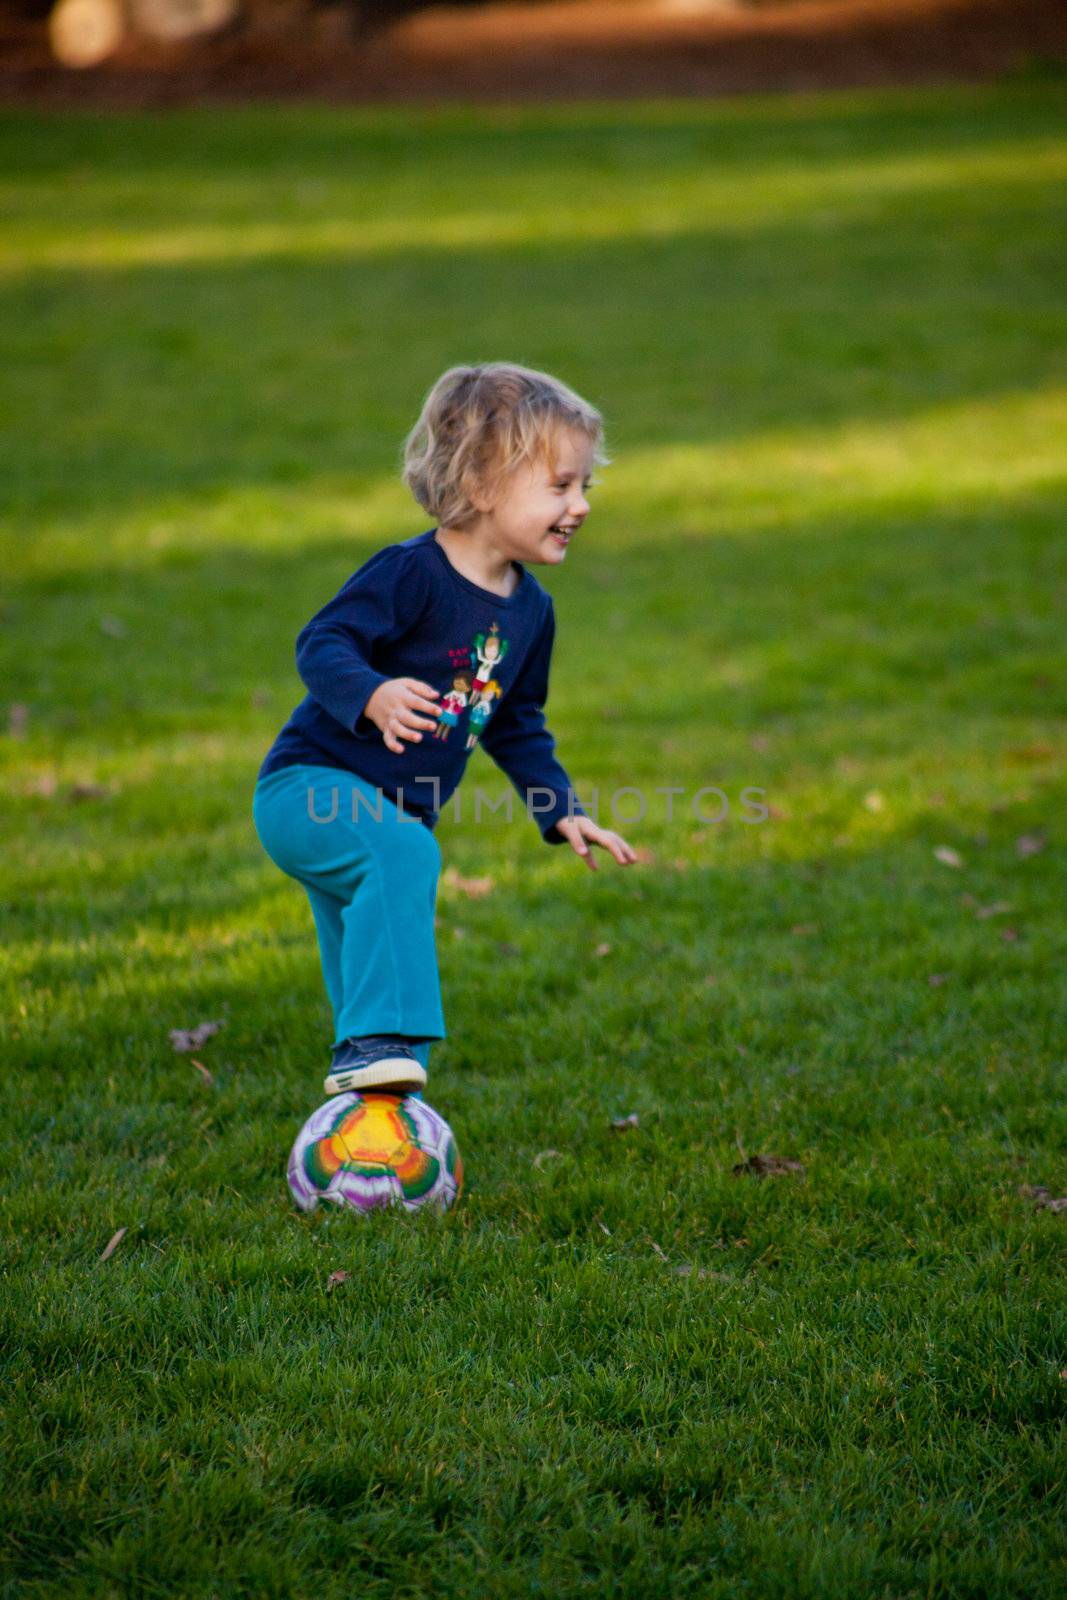 Cute little European girl having fun during soccer class in a park.